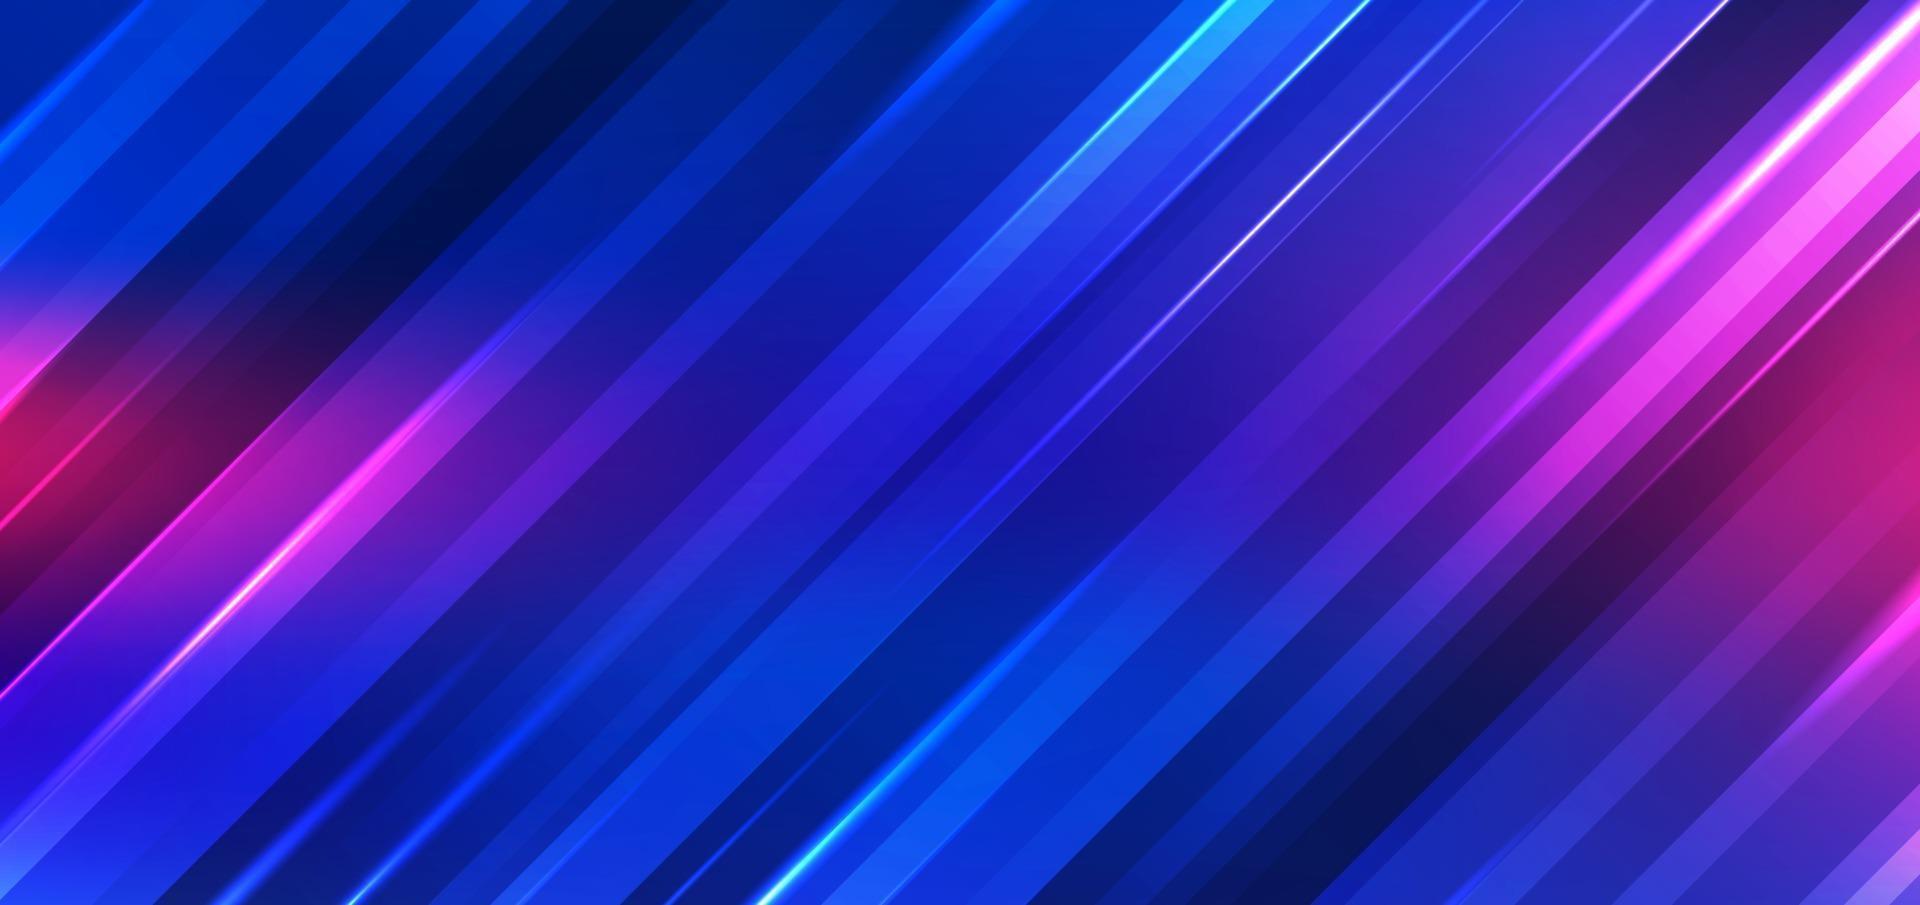 abstracte technologie futuristische achtergrond neonlichten effect glanzende gestreepte lijnen blauwe en roze gradiëntkleur. vector